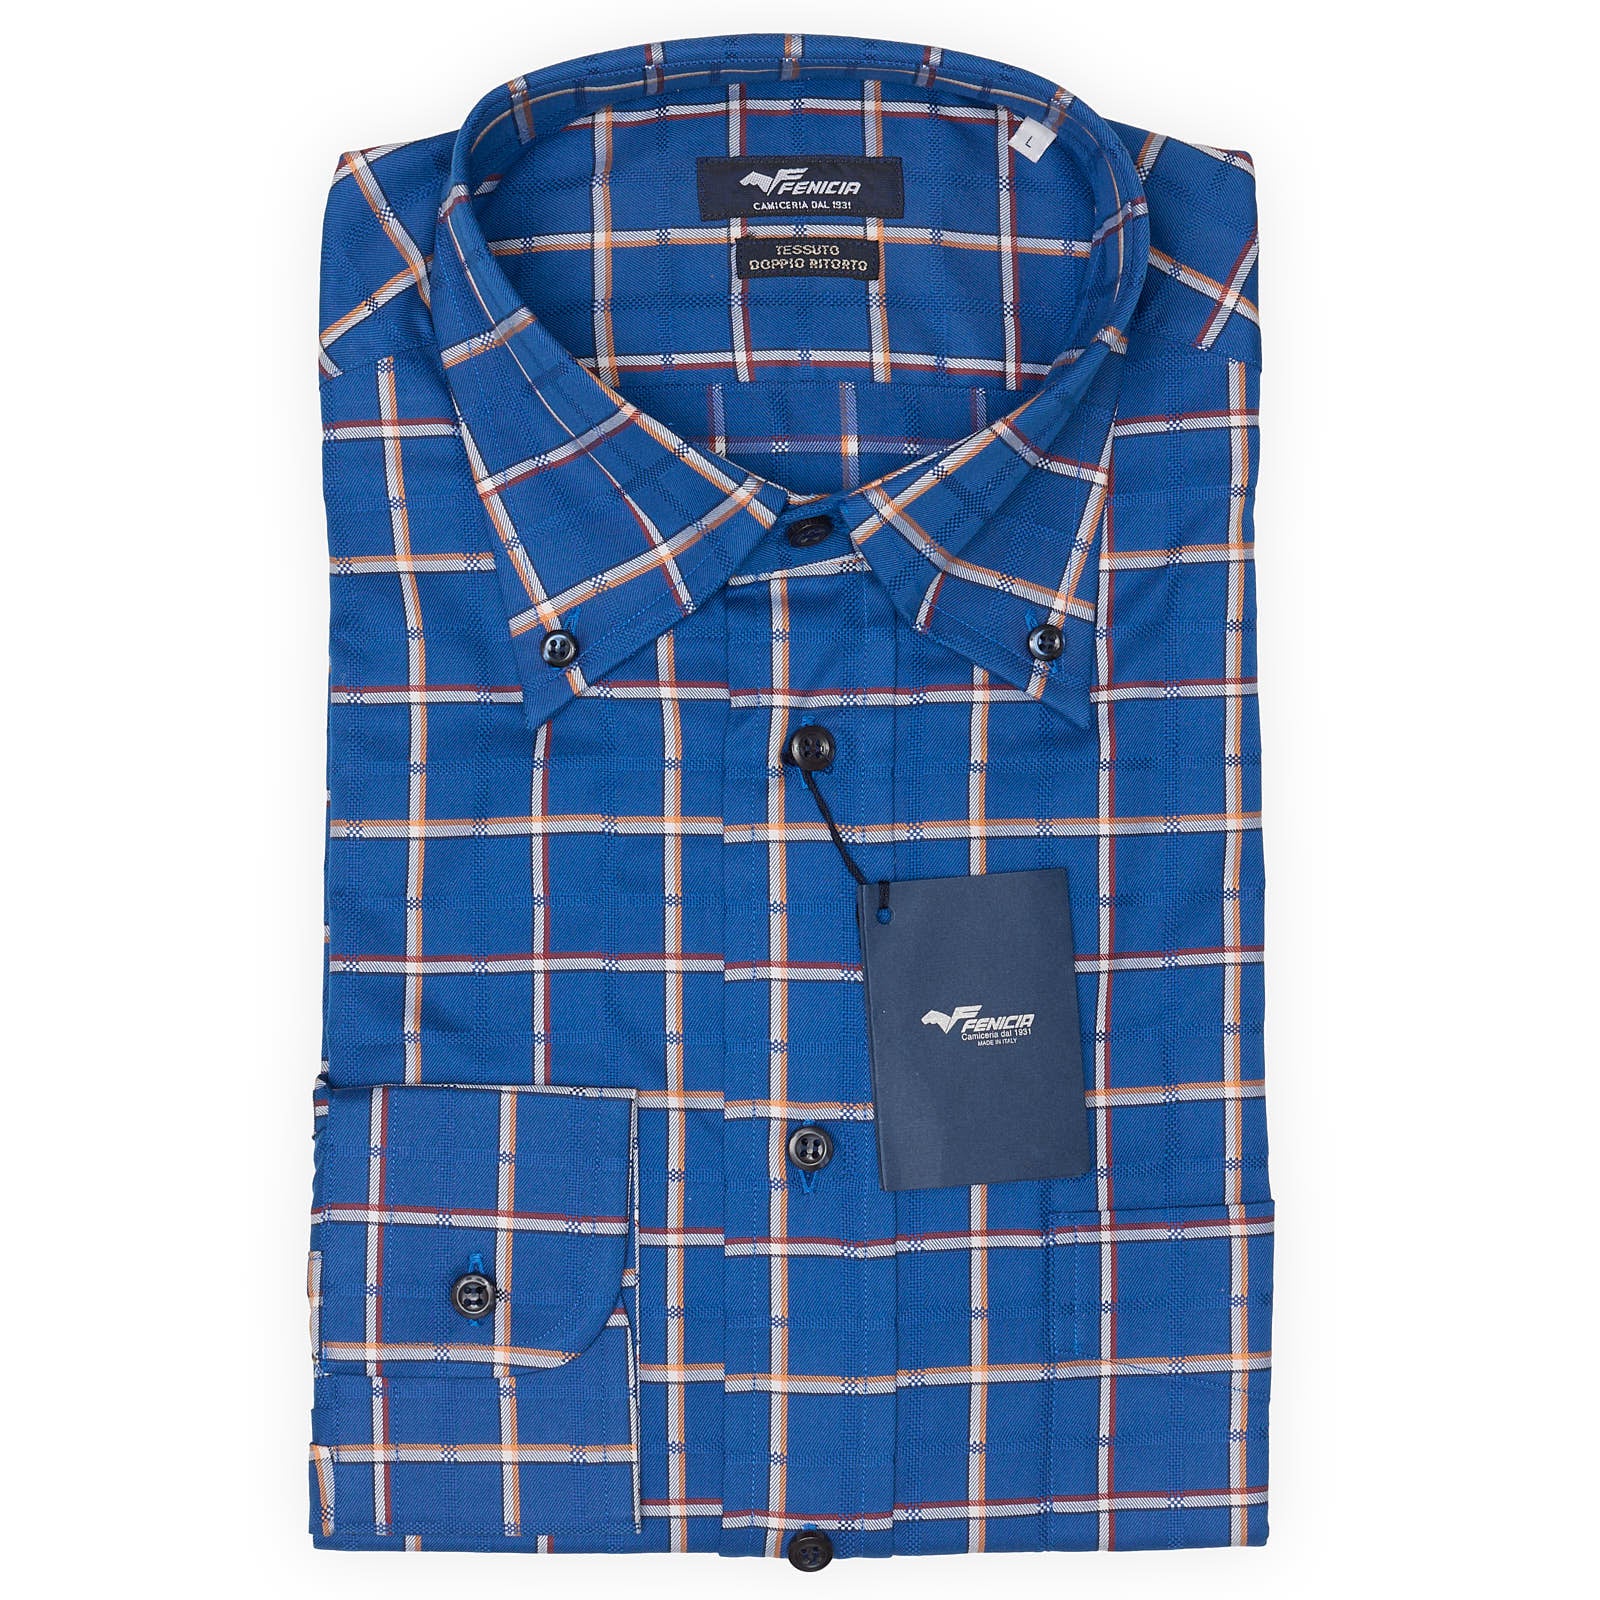 FENICIA Blue Plaid Twill Cotton Shirt EU L NEW US 16